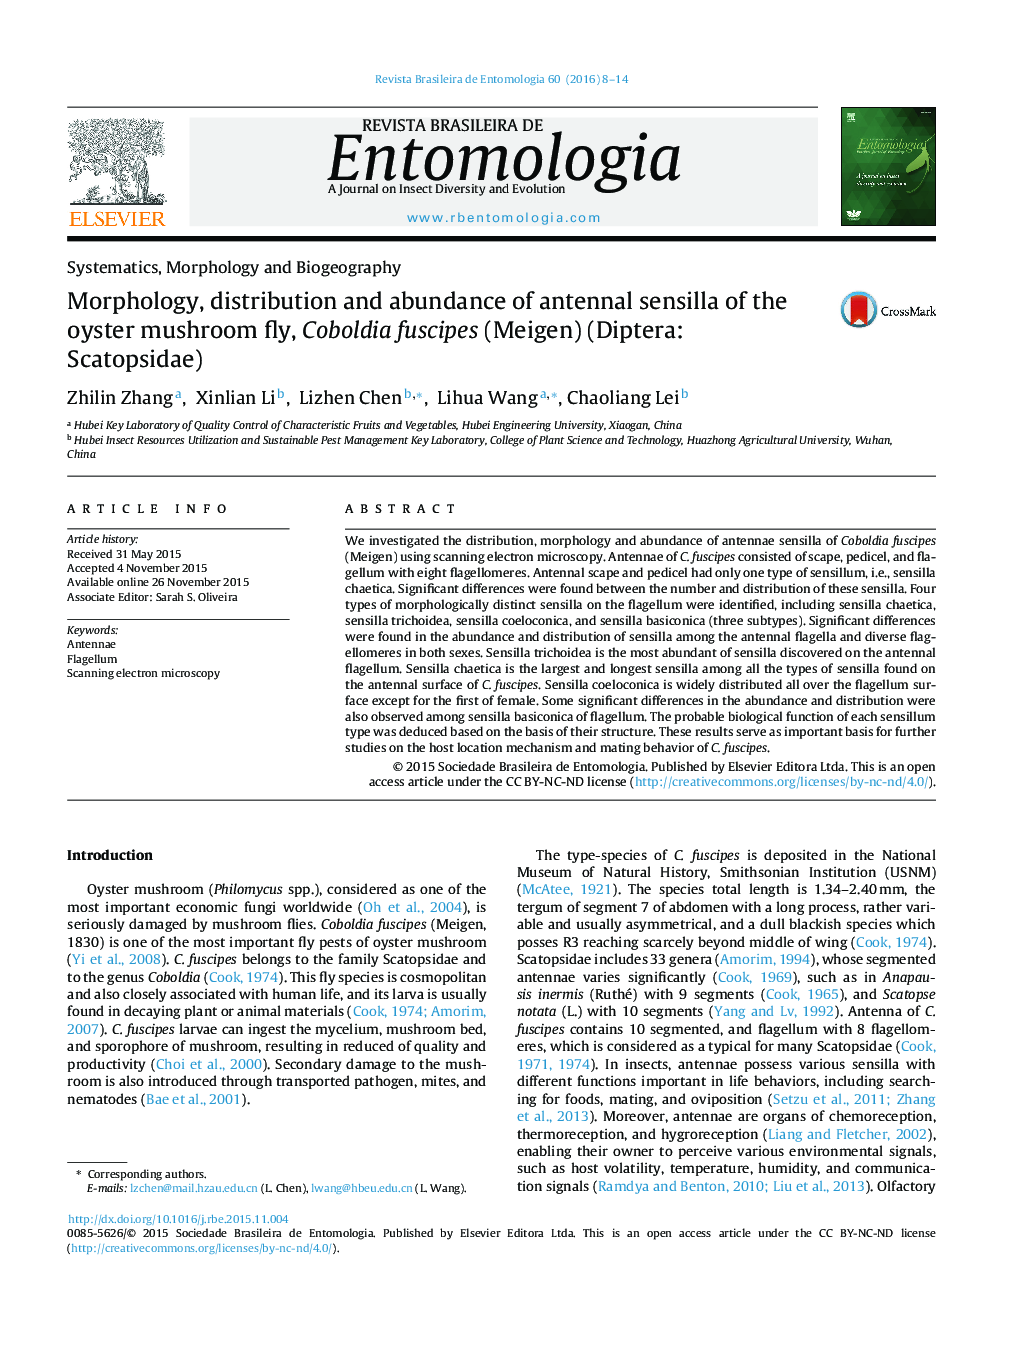 Morphology, distribution and abundance of antennal sensilla of the oyster mushroom fly, Coboldia fuscipes (Meigen) (Diptera: Scatopsidae)